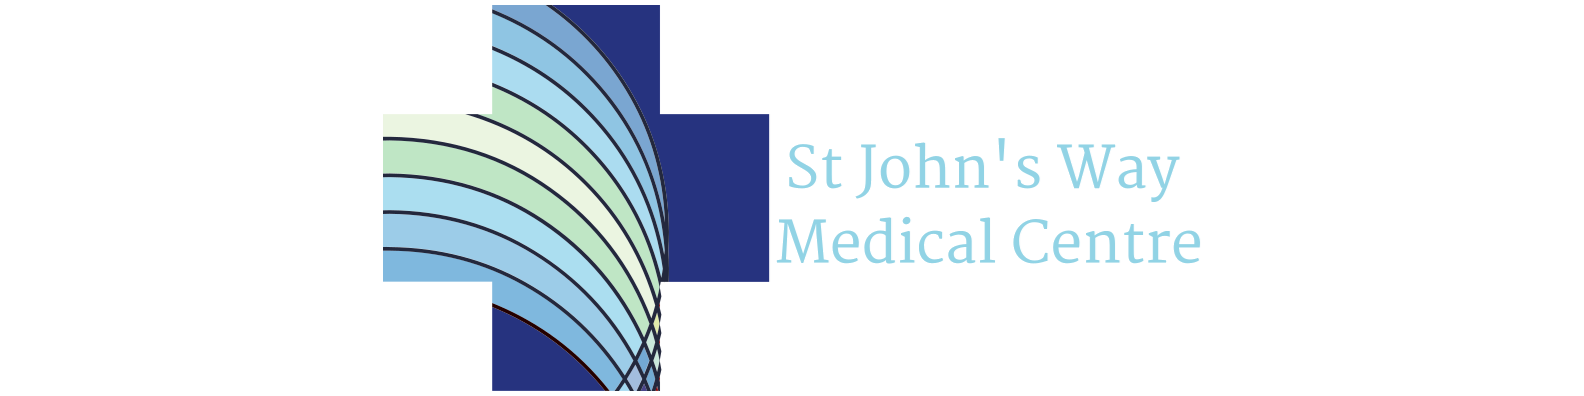 St John's Way Medical Centre Logo